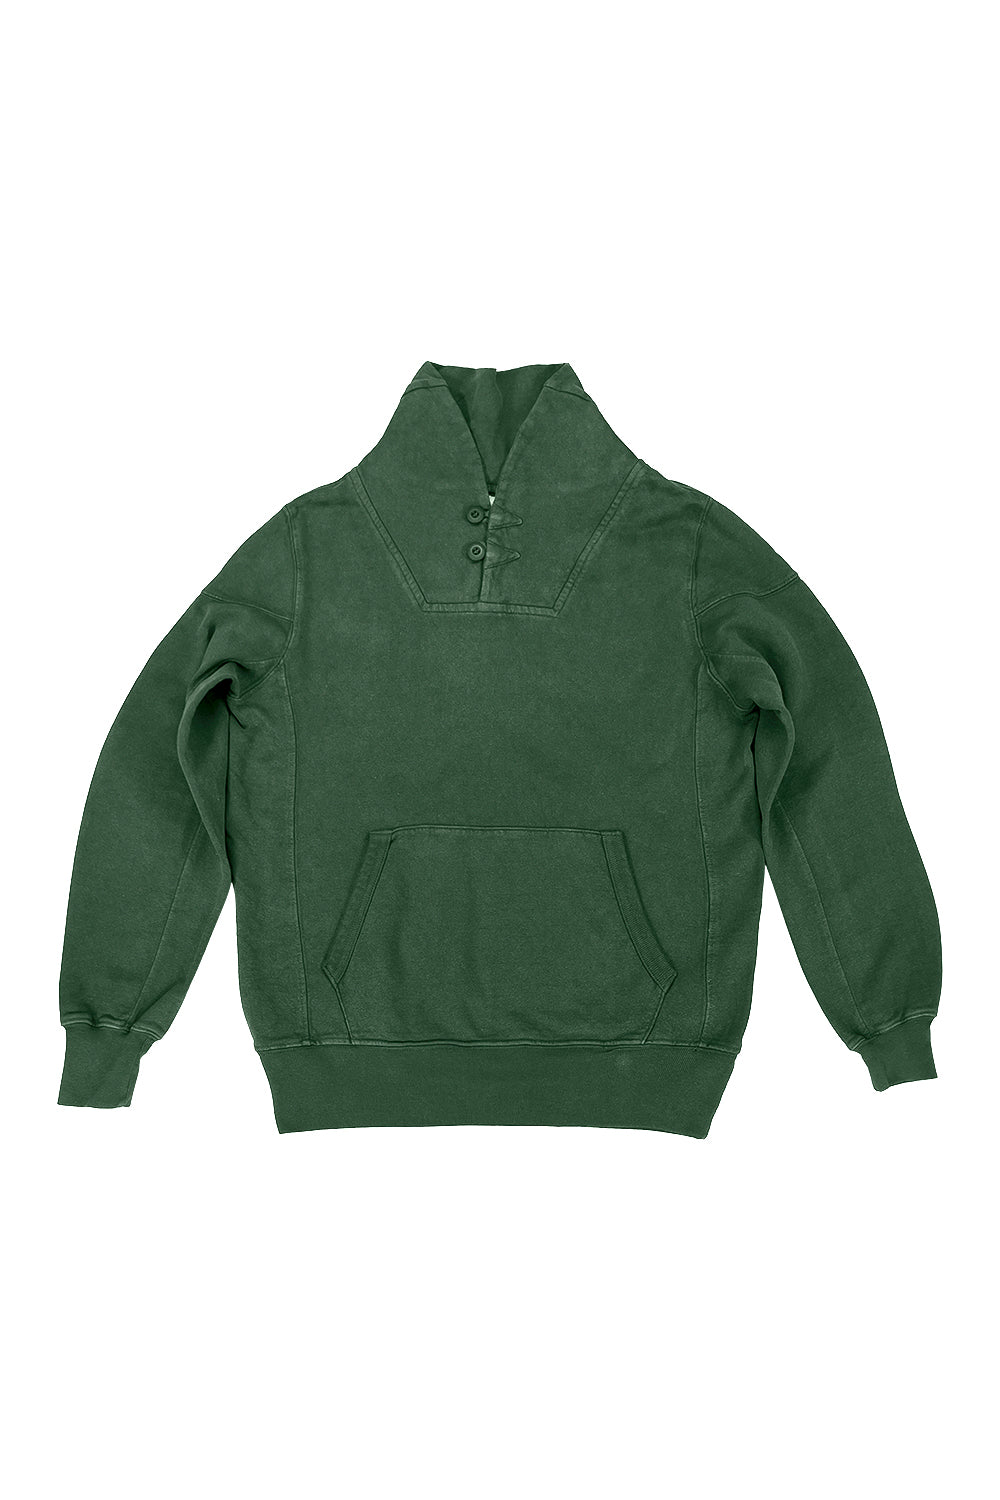 Whittier Sweatshirt | Jungmaven Hemp Clothing & Accessories / Color: Hunter Green